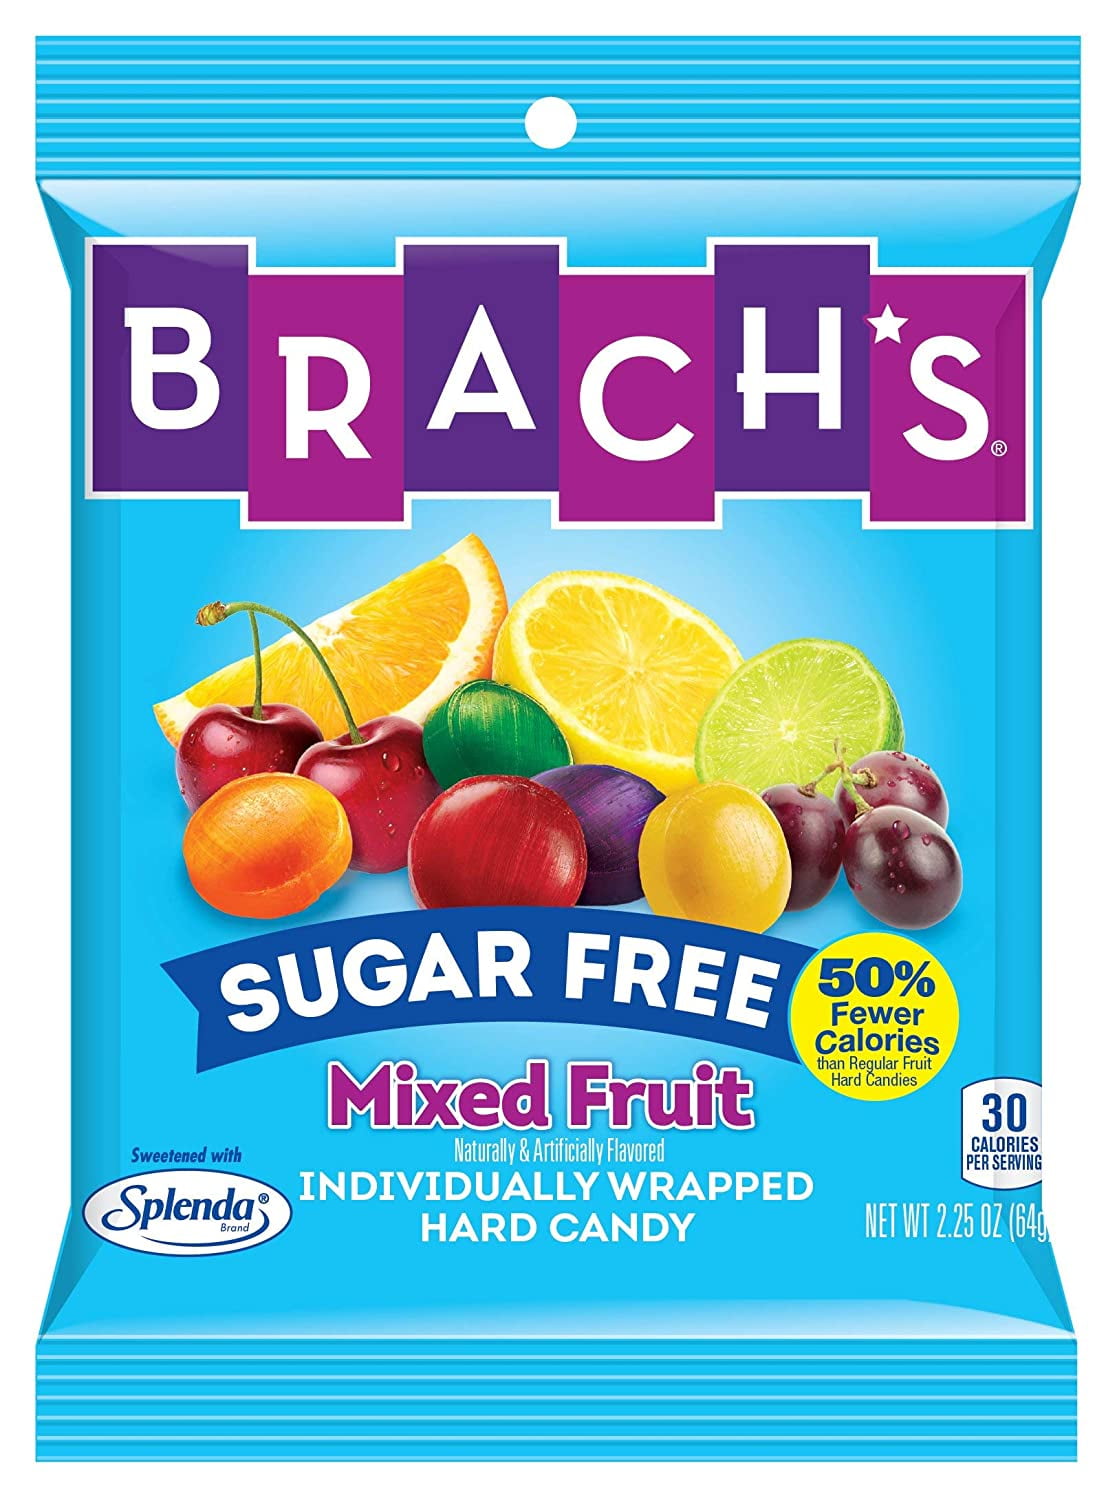 Is Brach's Sugar Free Fruit Slices Keto?